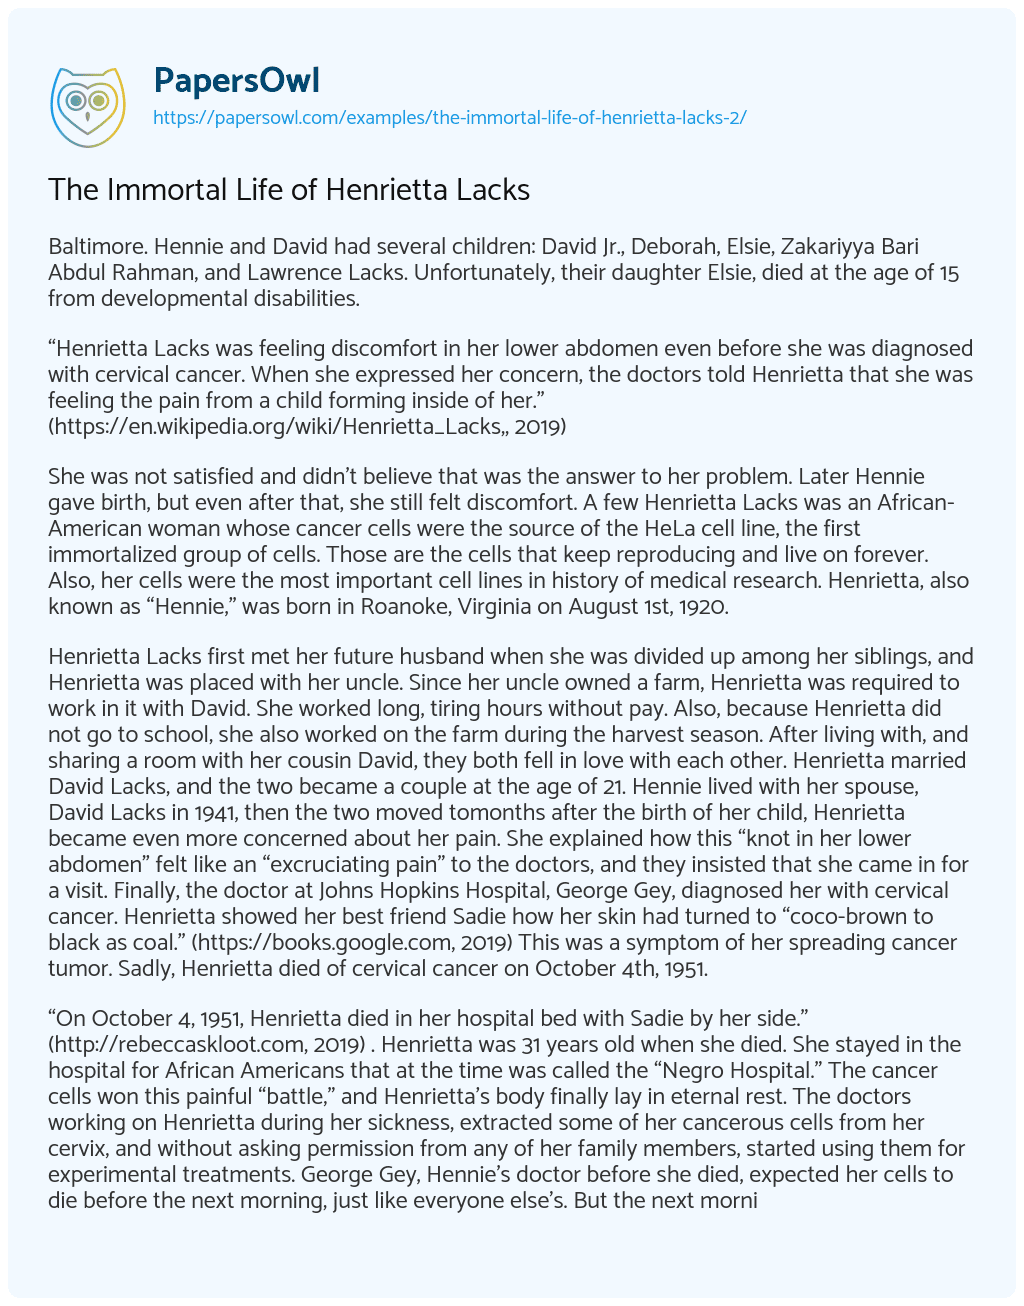 The Immortal Life of Henrietta Lacks essay